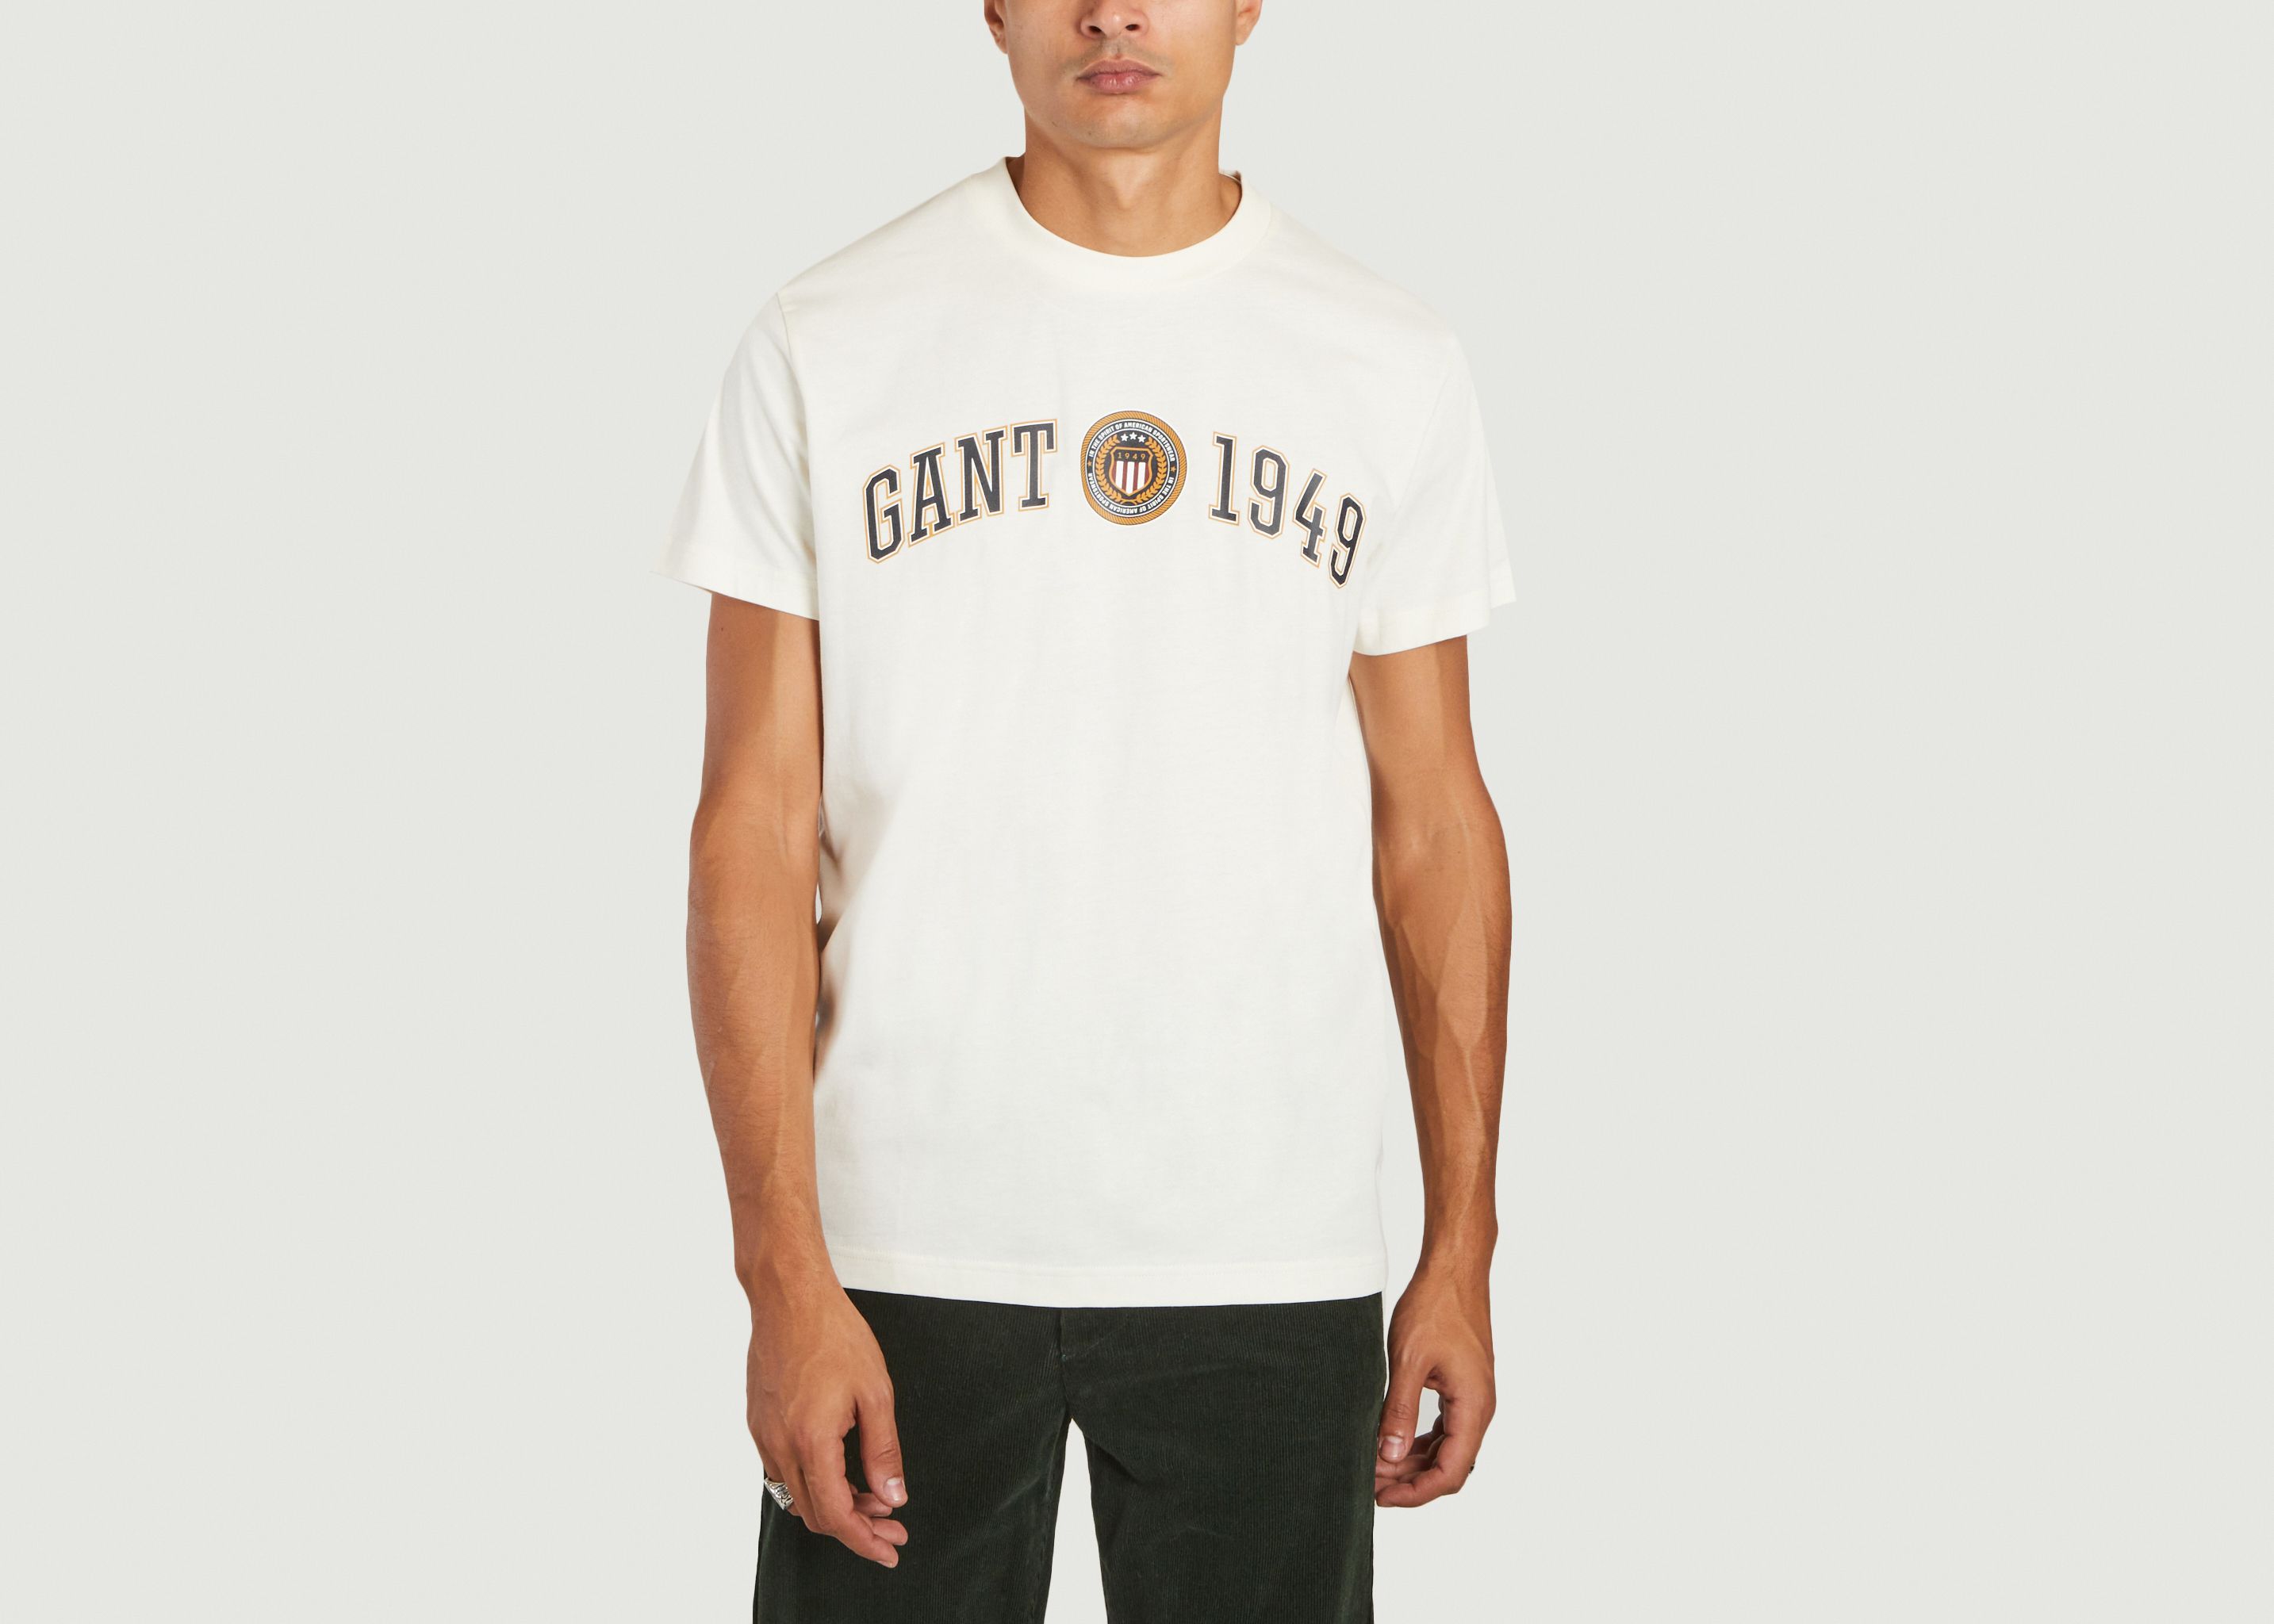 Crest Shield T-shirt - Gant